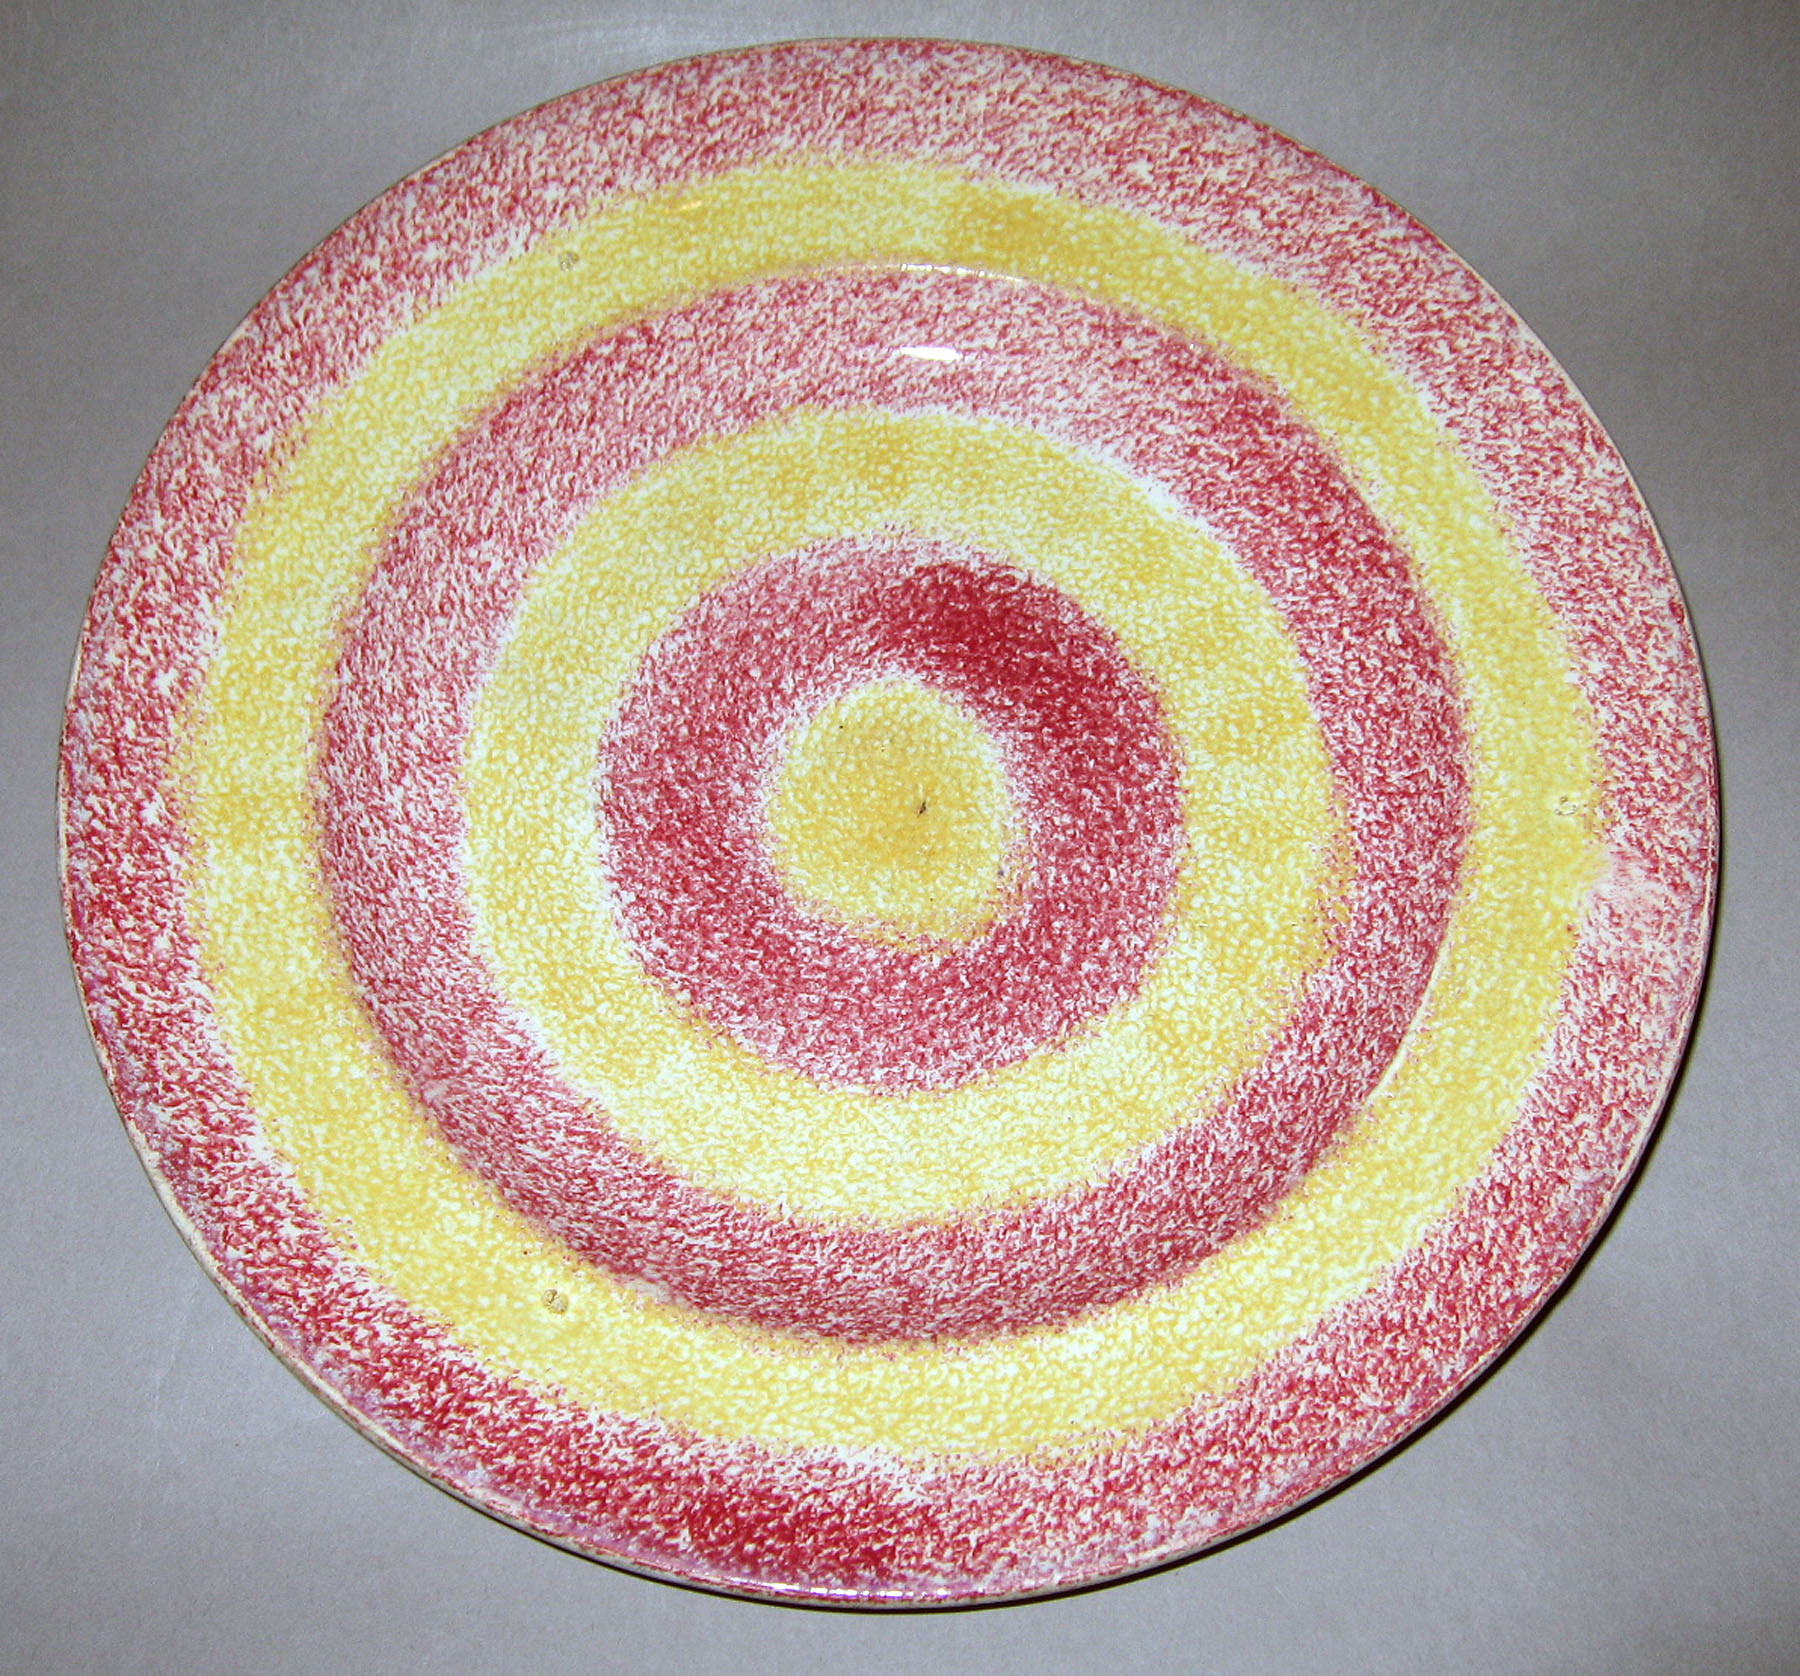 1965.0774.002 Spatterware plate